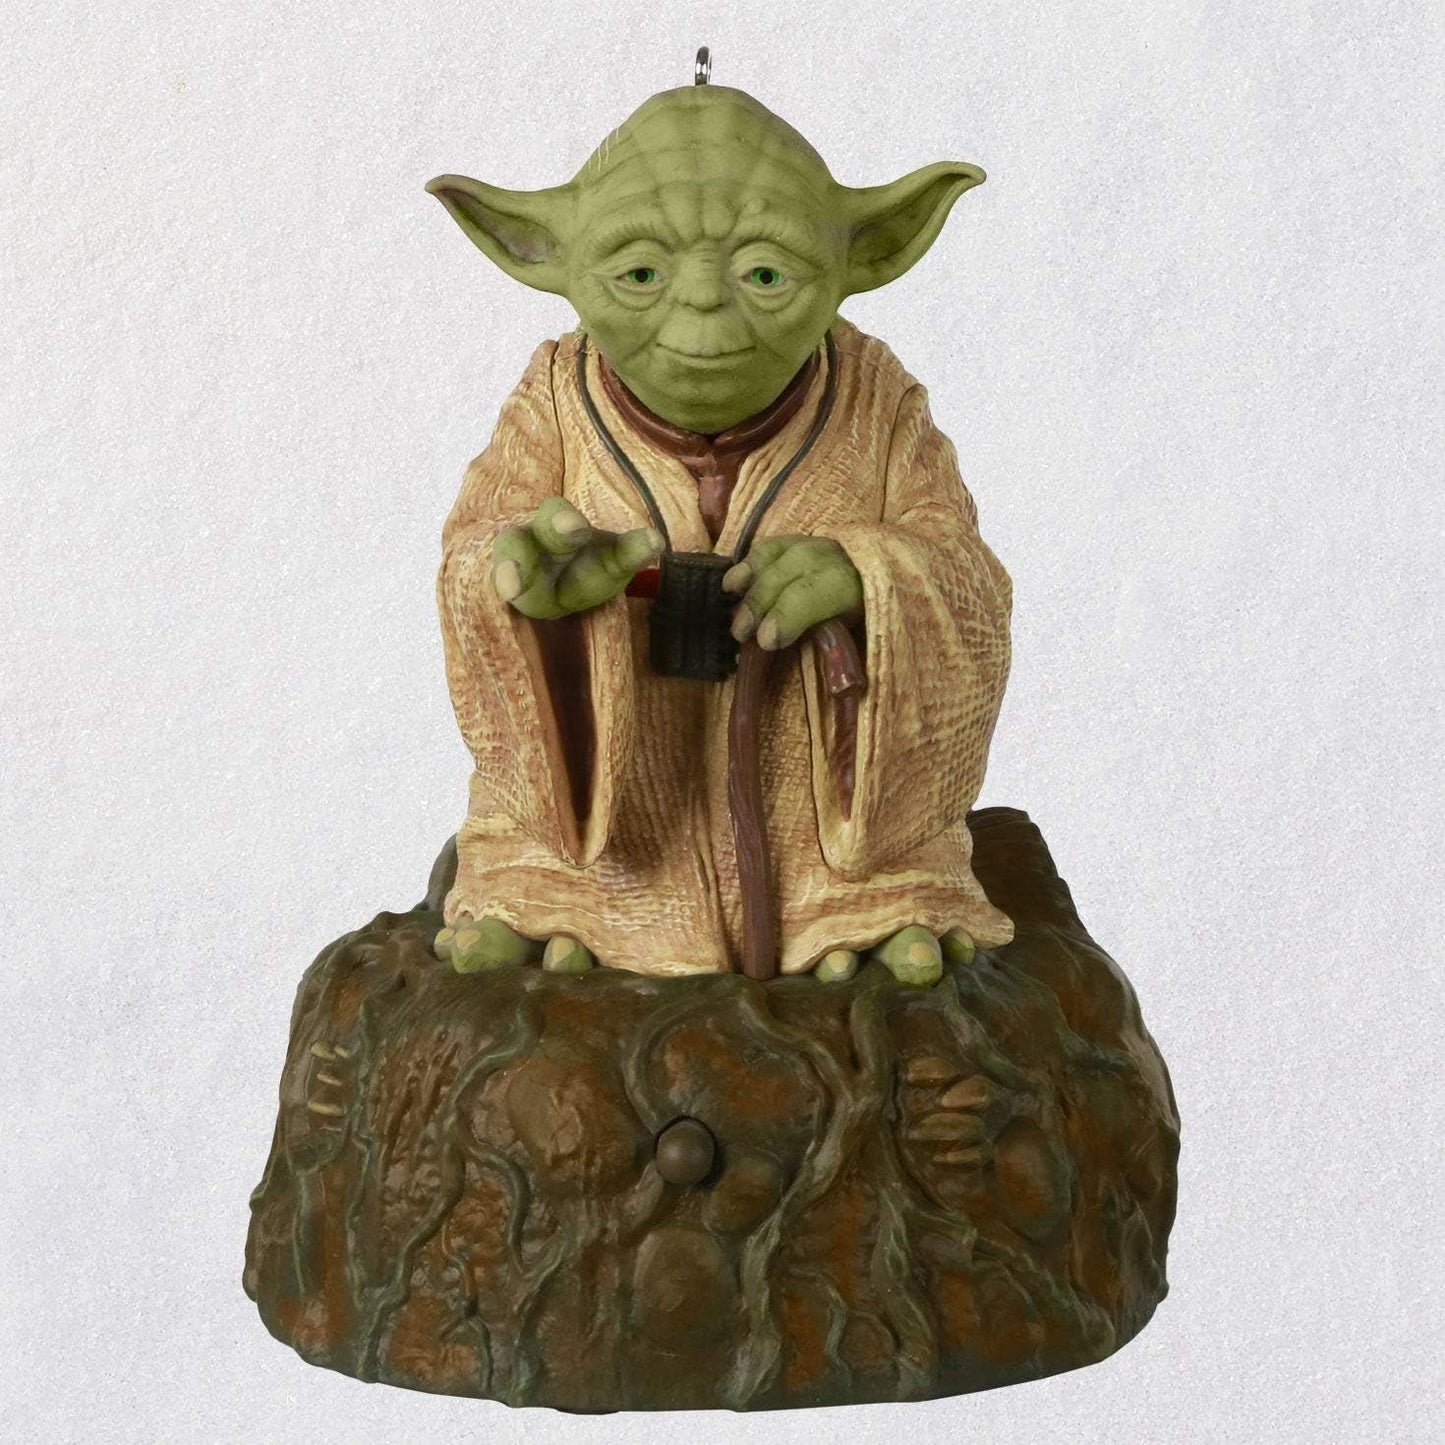 Star Wars: The Empire Strikes Back Jedi Master Yoda, 2020 Keepsake Ornament